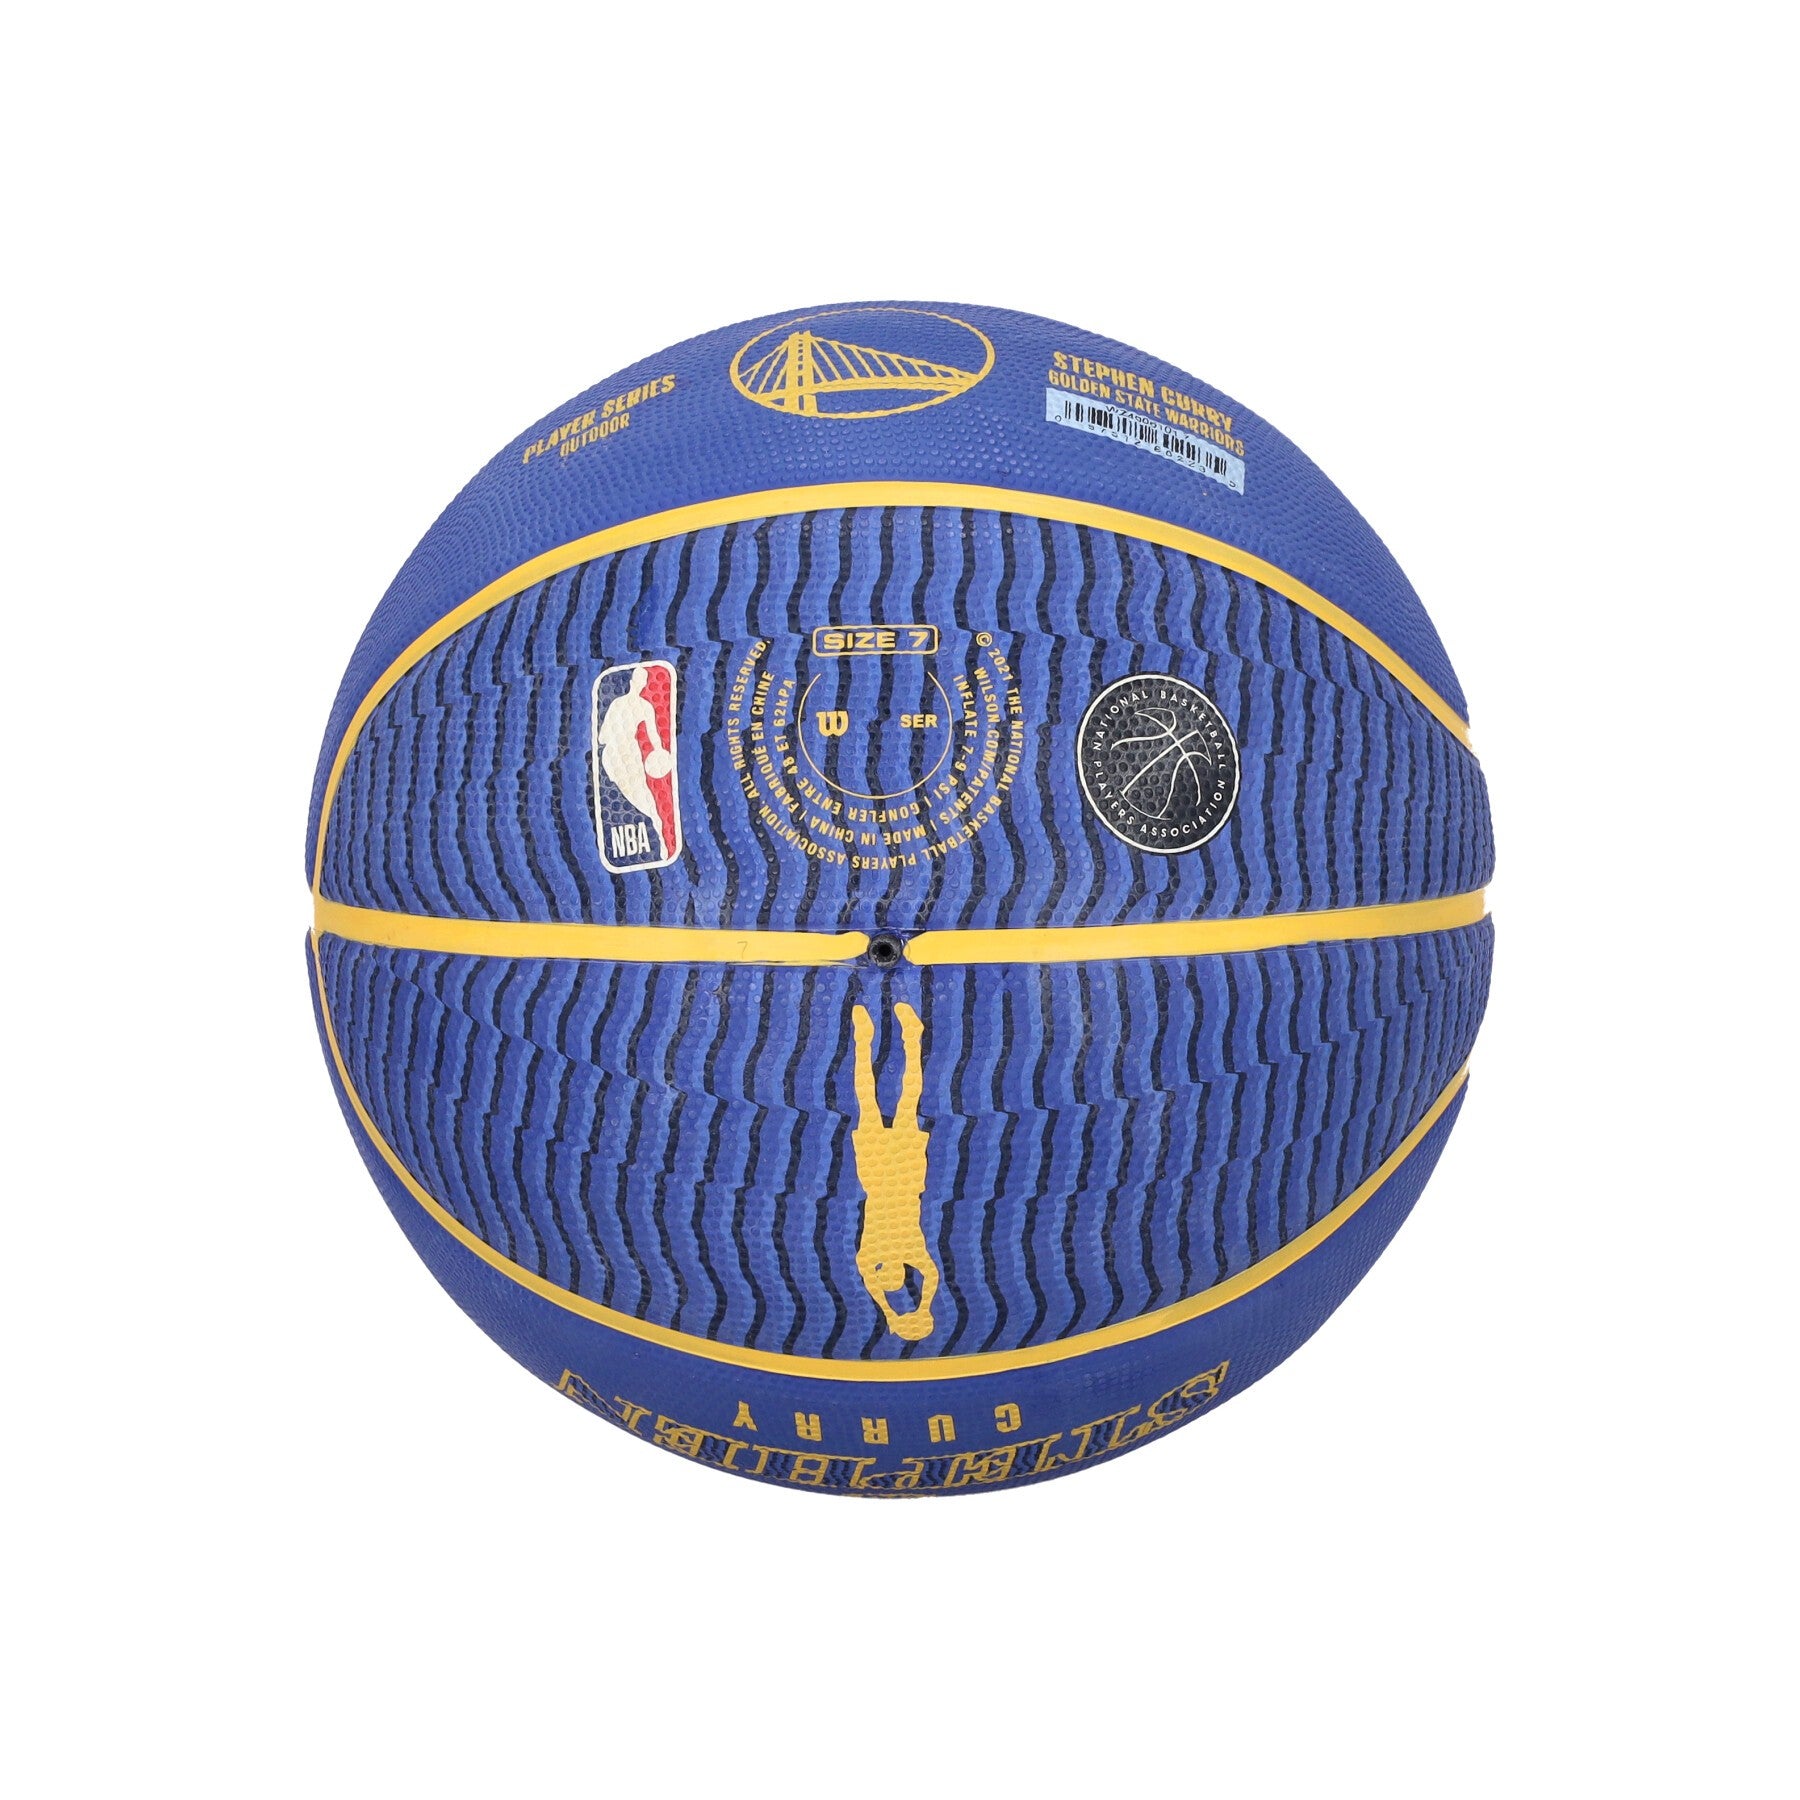 Men's NBA Stephen Curry Icon Outdoor Basketball Size 7 Blue